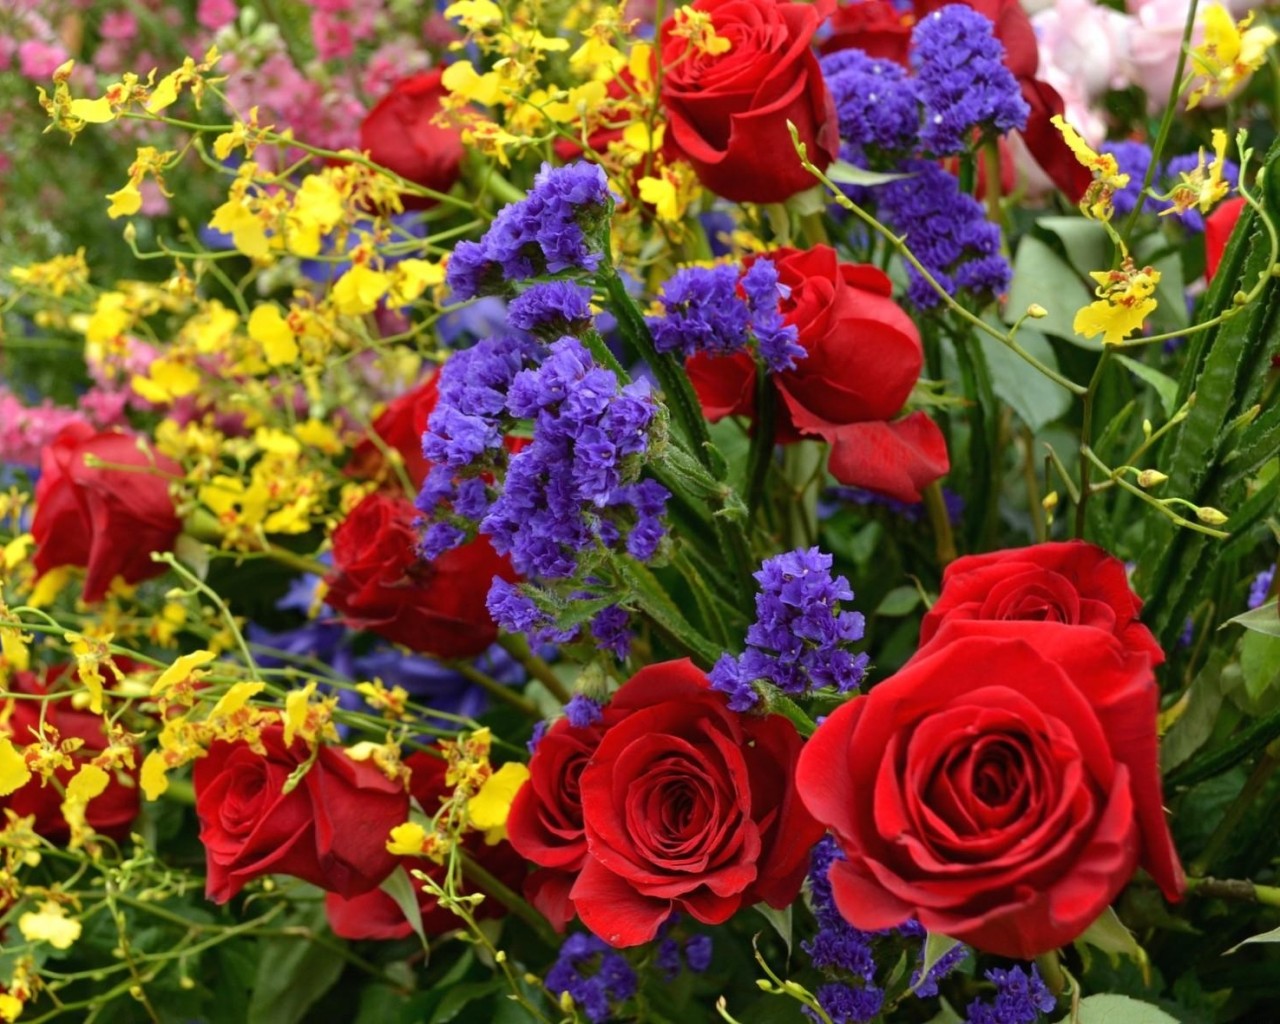 roses_flowers_variety_vibrant_sharpness_62779_1280x1024.jpg